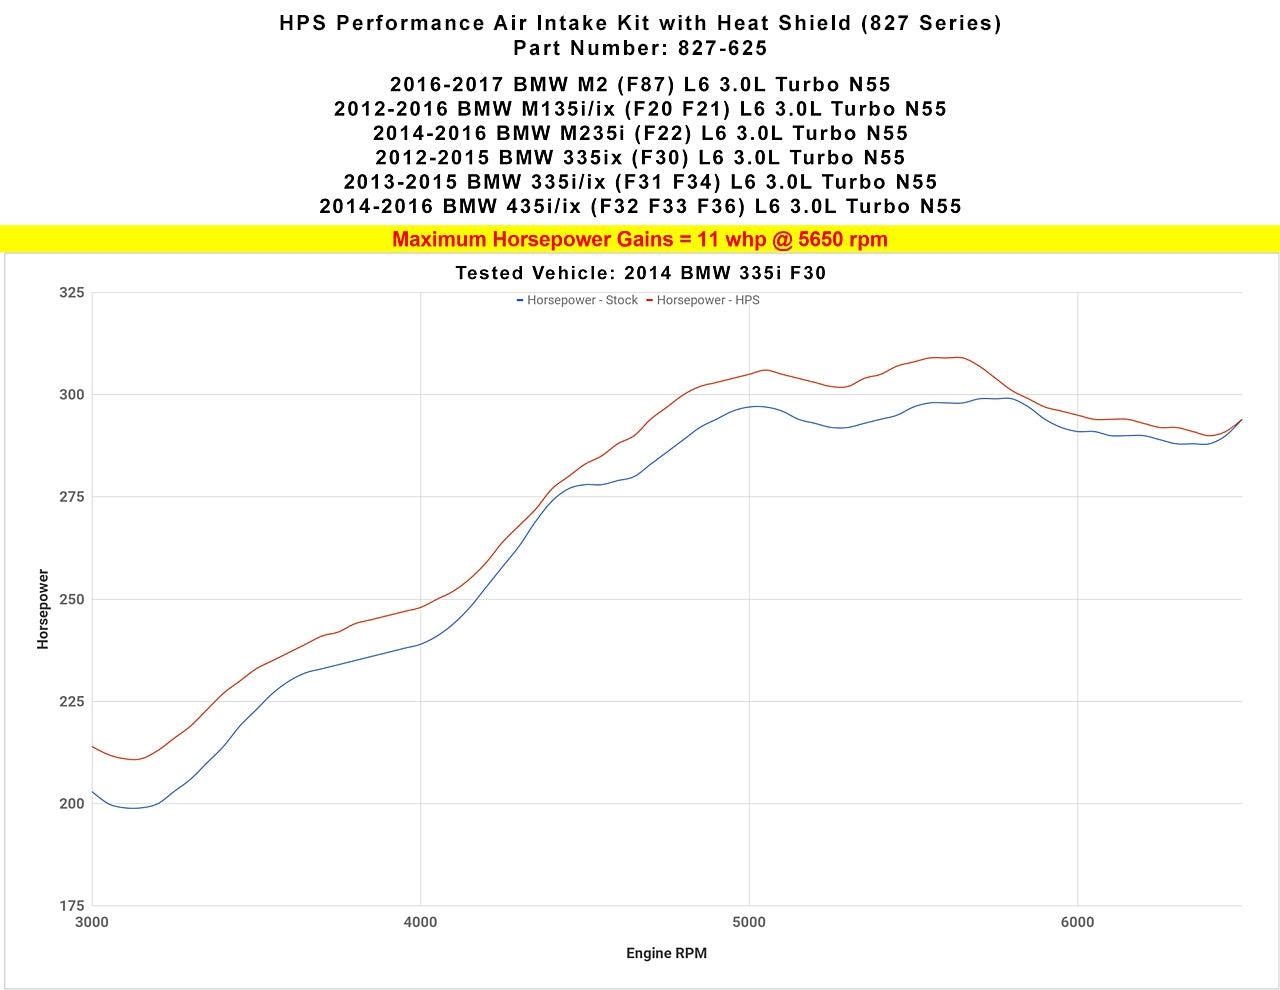 Dyno proven gains 11 whp HPS Performance Shortram Air Intake Kit 2012-2015 BMW 335ix F30 3.0L Turbo N55 827-625BL